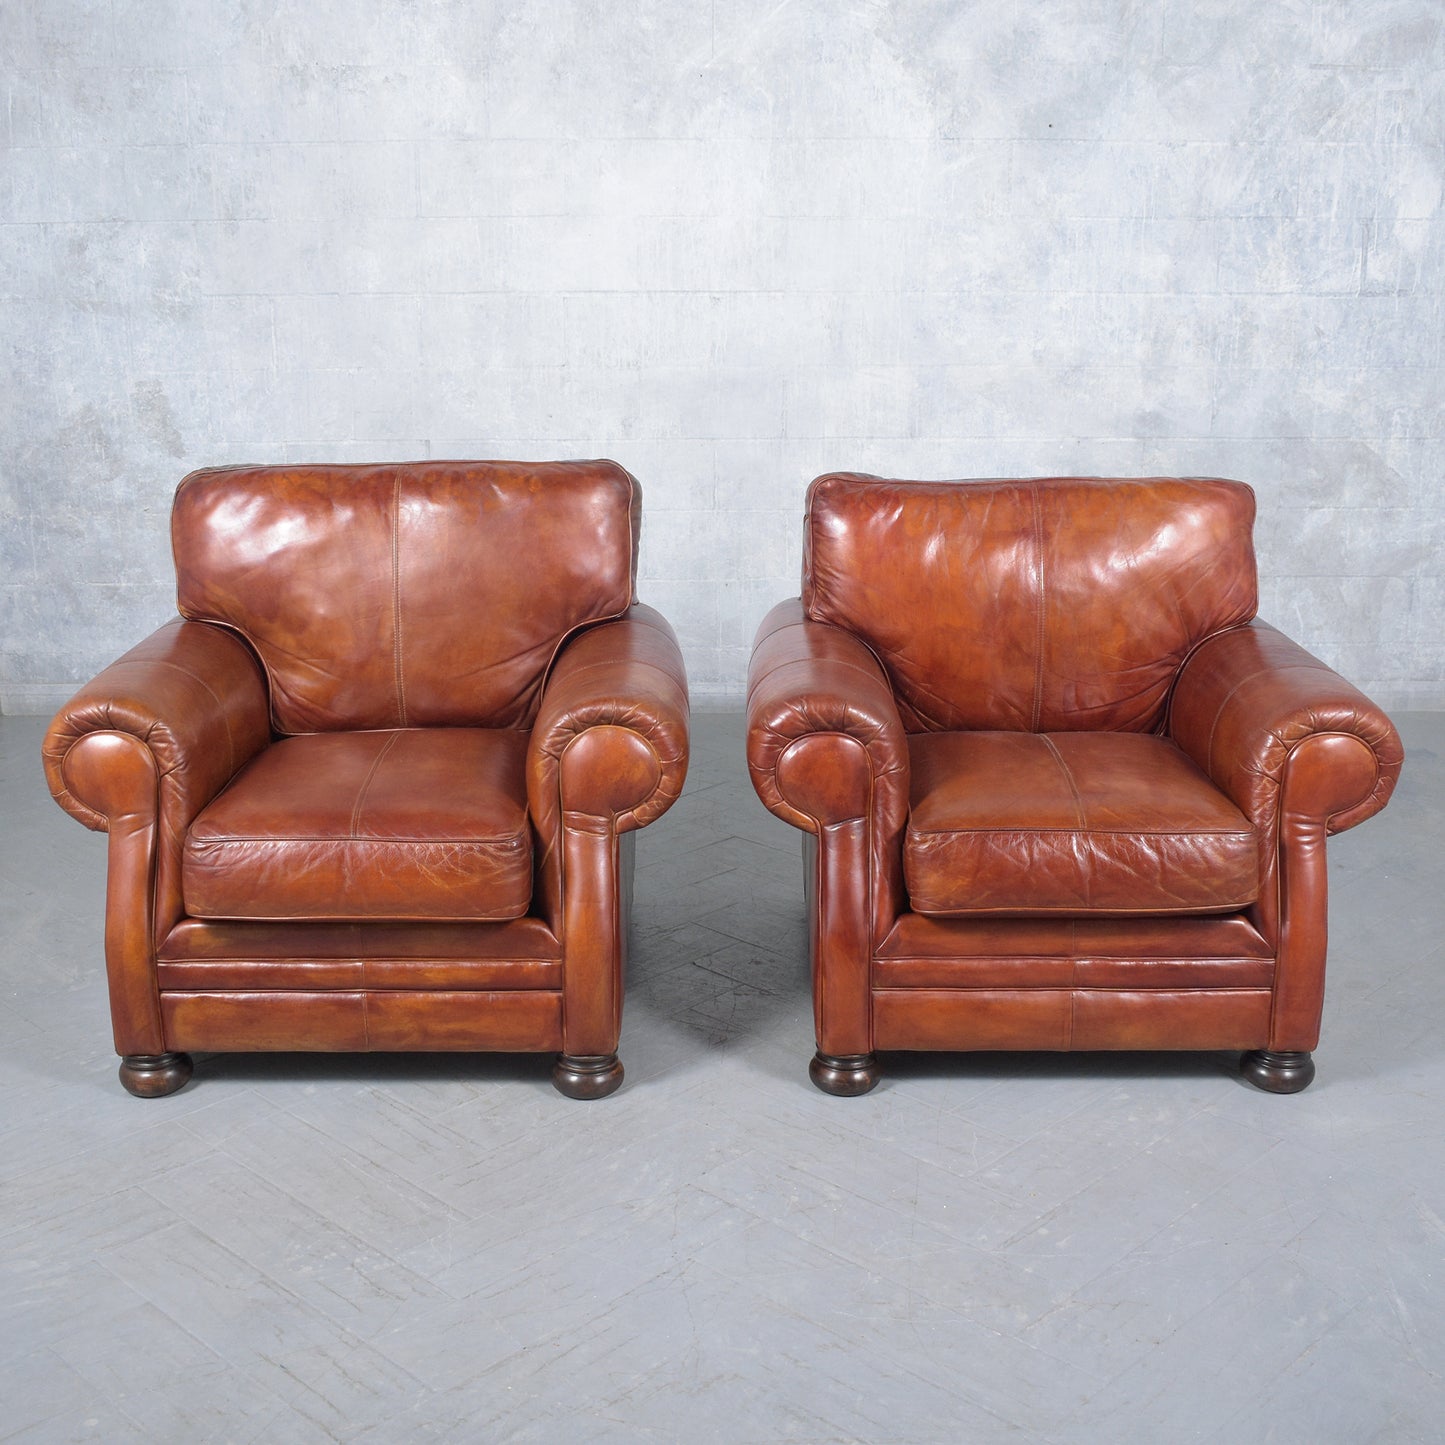 Restored Vintage Leather Armchairs: Rich Cognac Brown Elegance